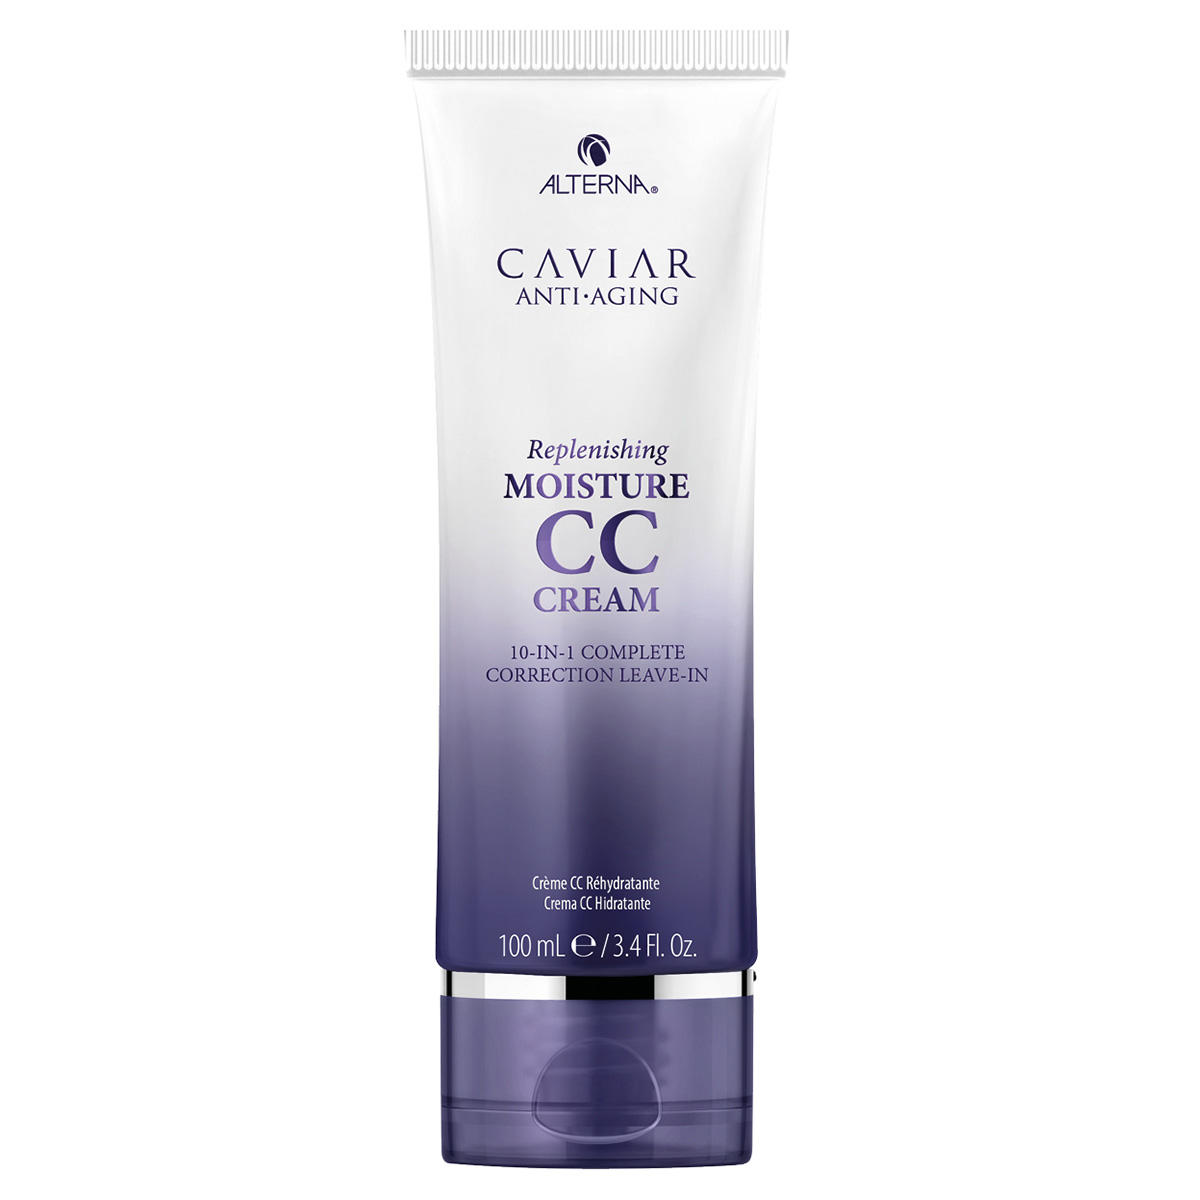 Alterna Caviar Anti-Aging Replenishing Moisture CC Cream  - 1